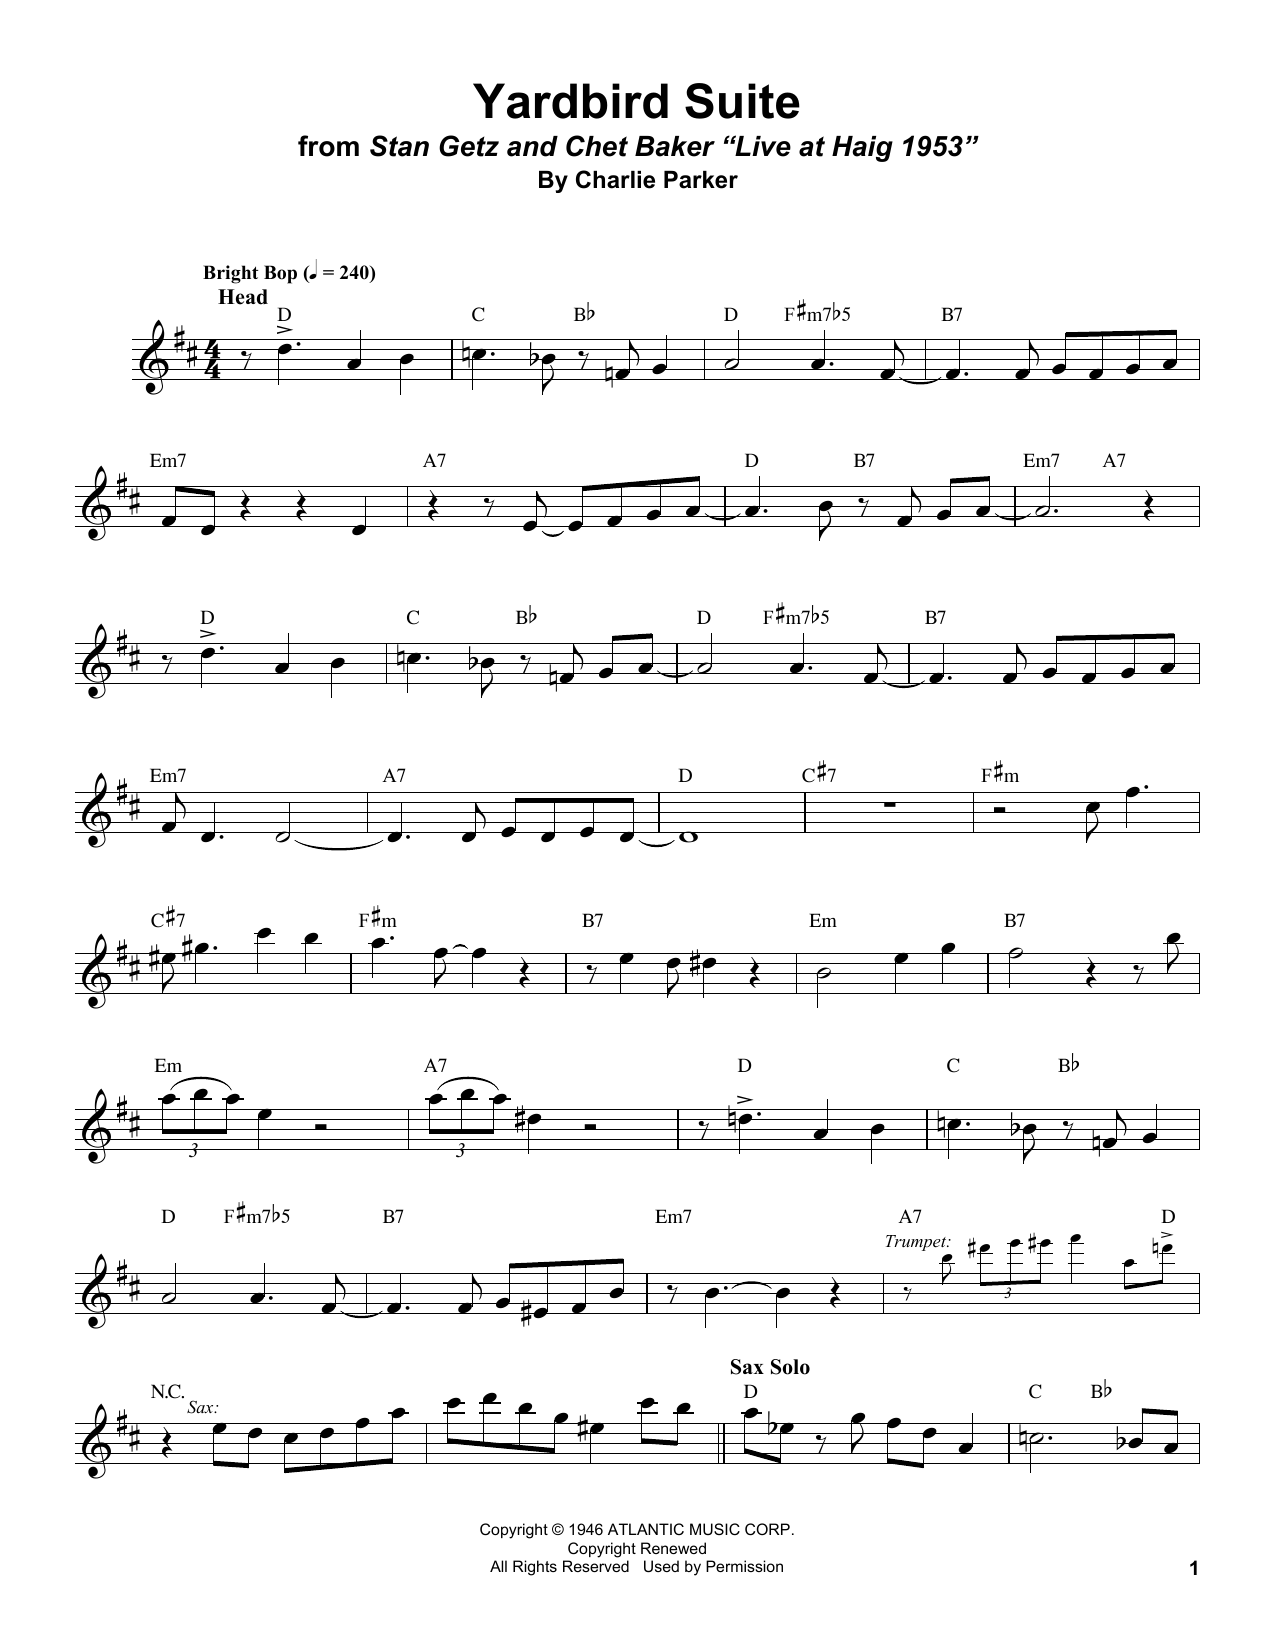 Stan Getz Yardbird Suite Sheet Music Notes & Chords for Alto Sax Transcription - Download or Print PDF